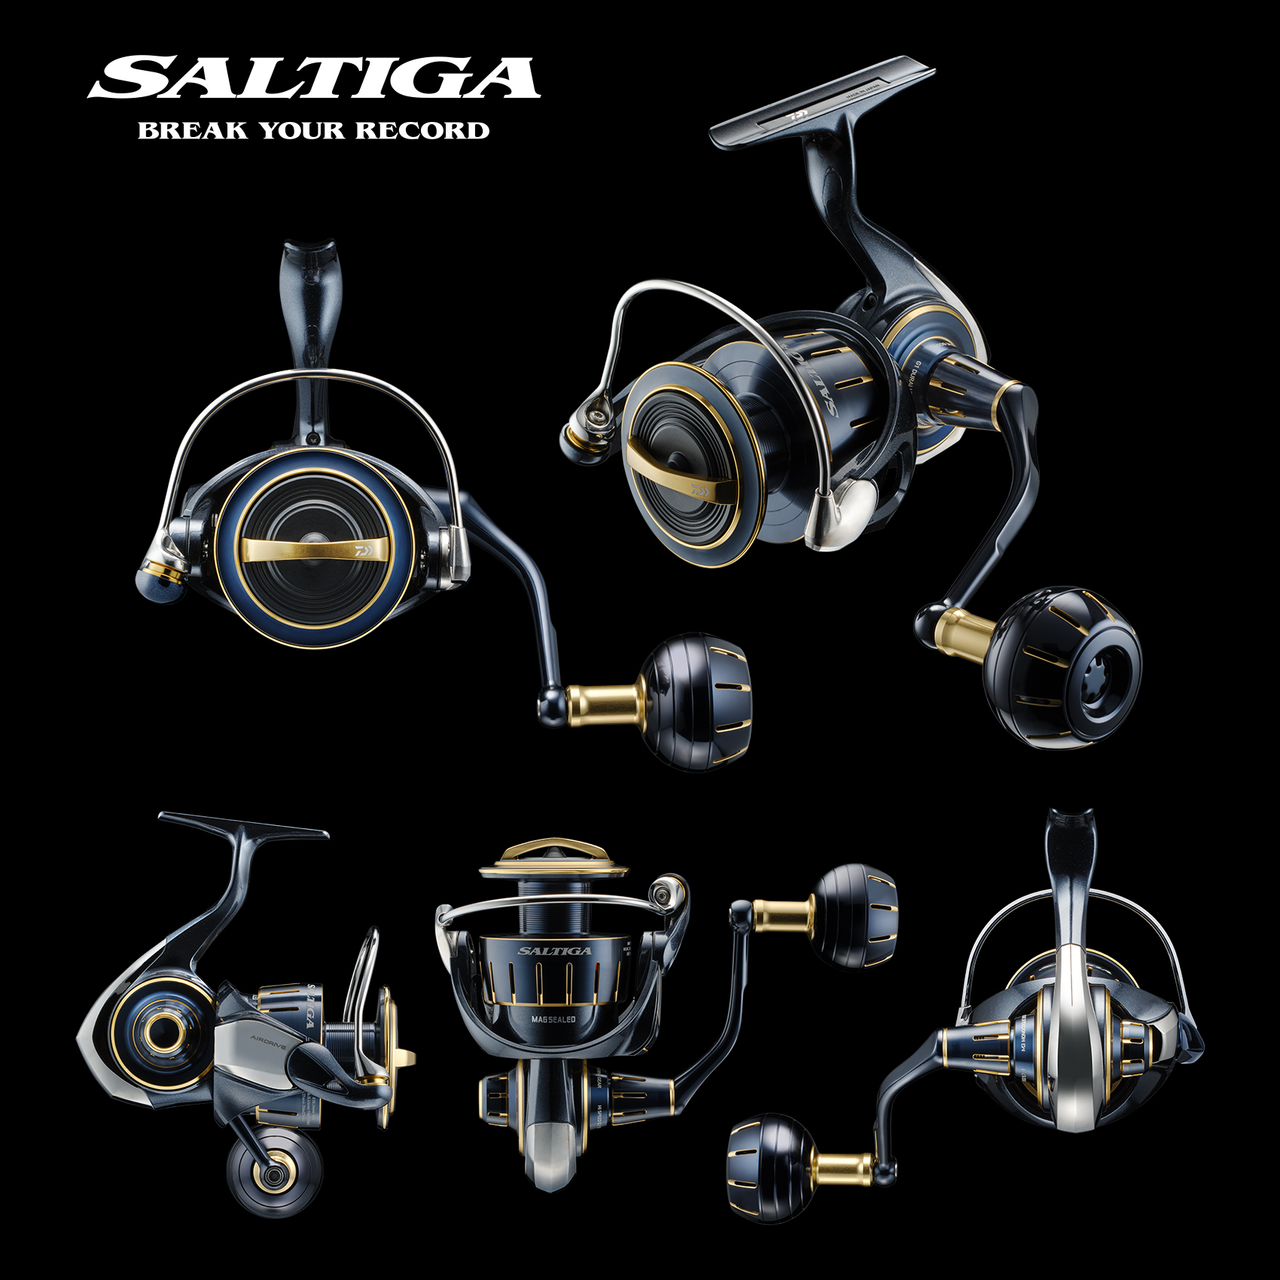 Daiwa 2020 Saltiga Spinning Reel